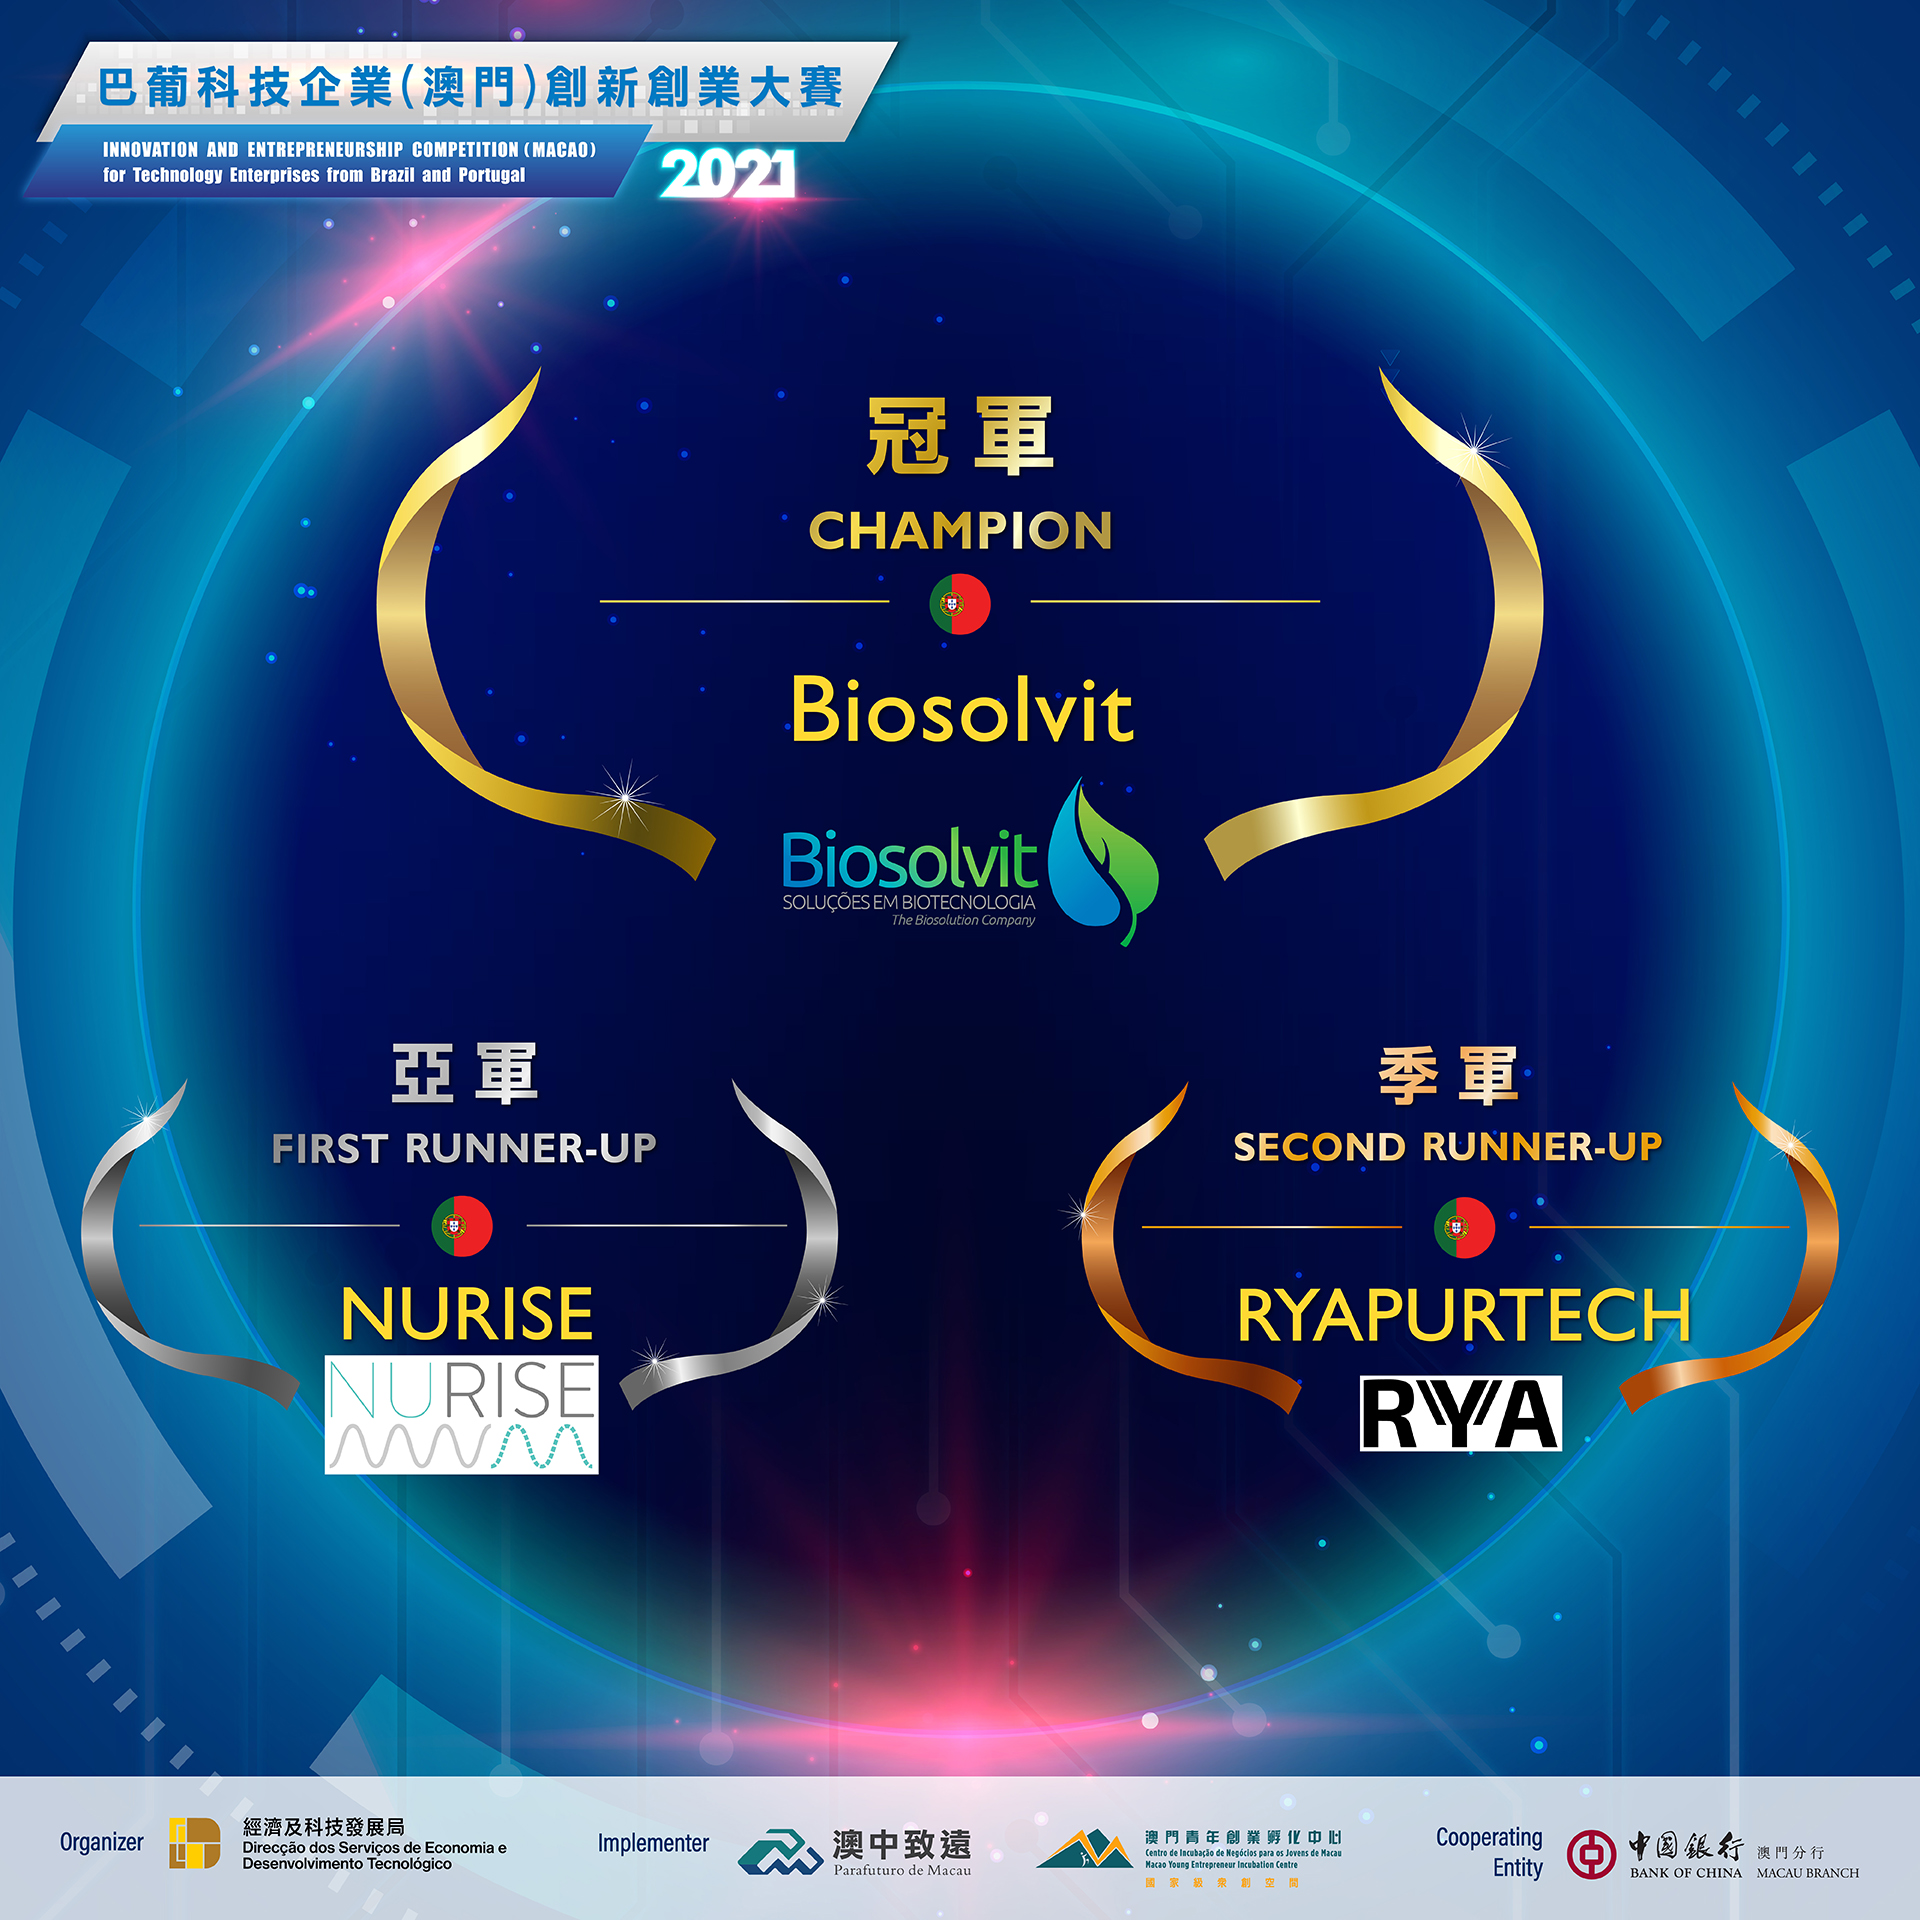 Macao innovation contest - Biosolvit